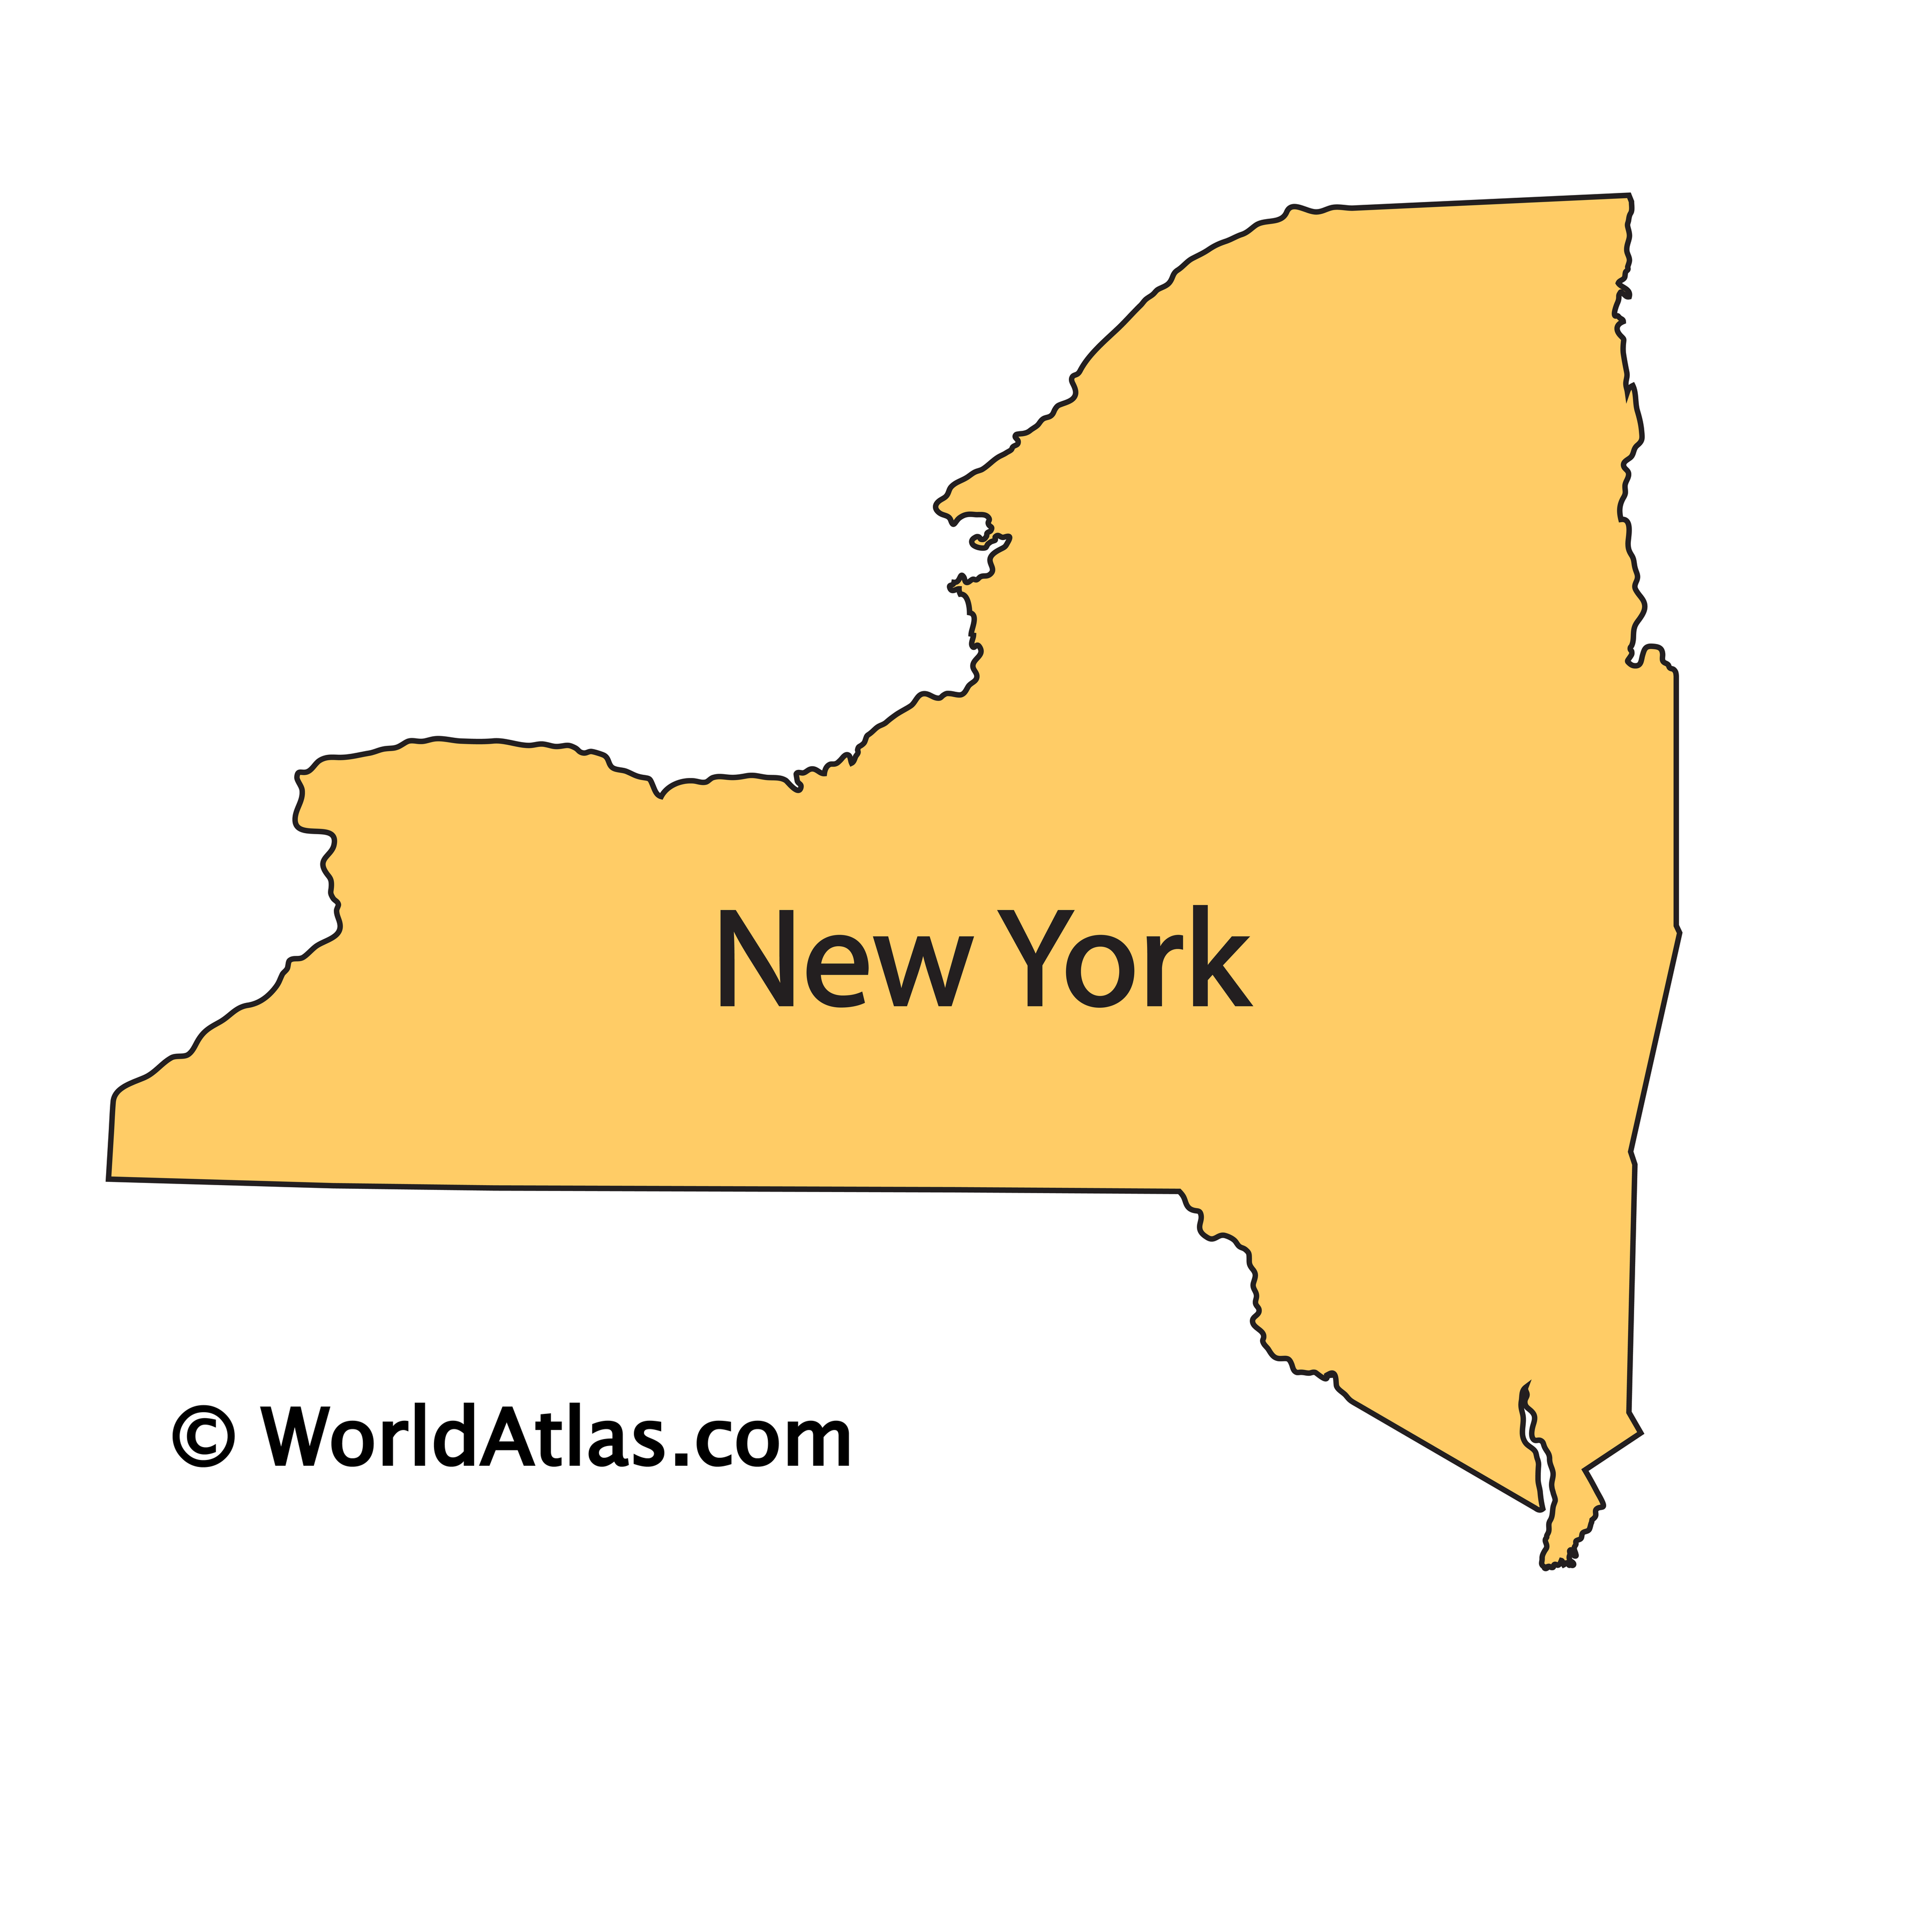 New York Maps & Facts - World Atlas